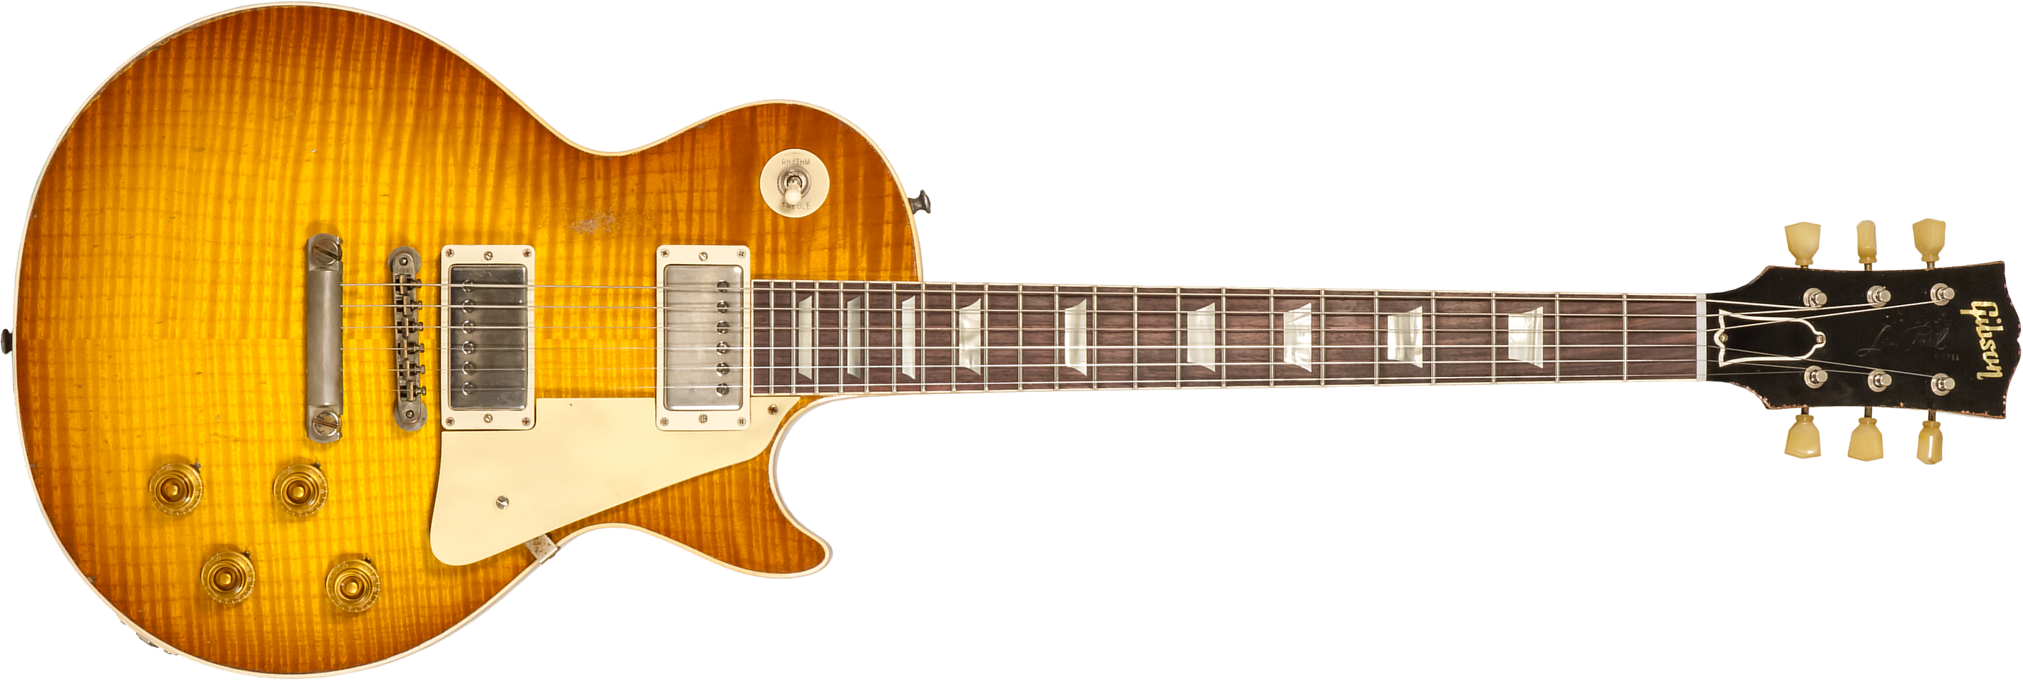 Gibson Custom Shop M2m Les Paul Standard 1959 Reissue 2h Ht Rw #934257 - Murphy Lab Heavy Aged Golden Poppy Burst - Enkel gesneden elektrische gitaar 